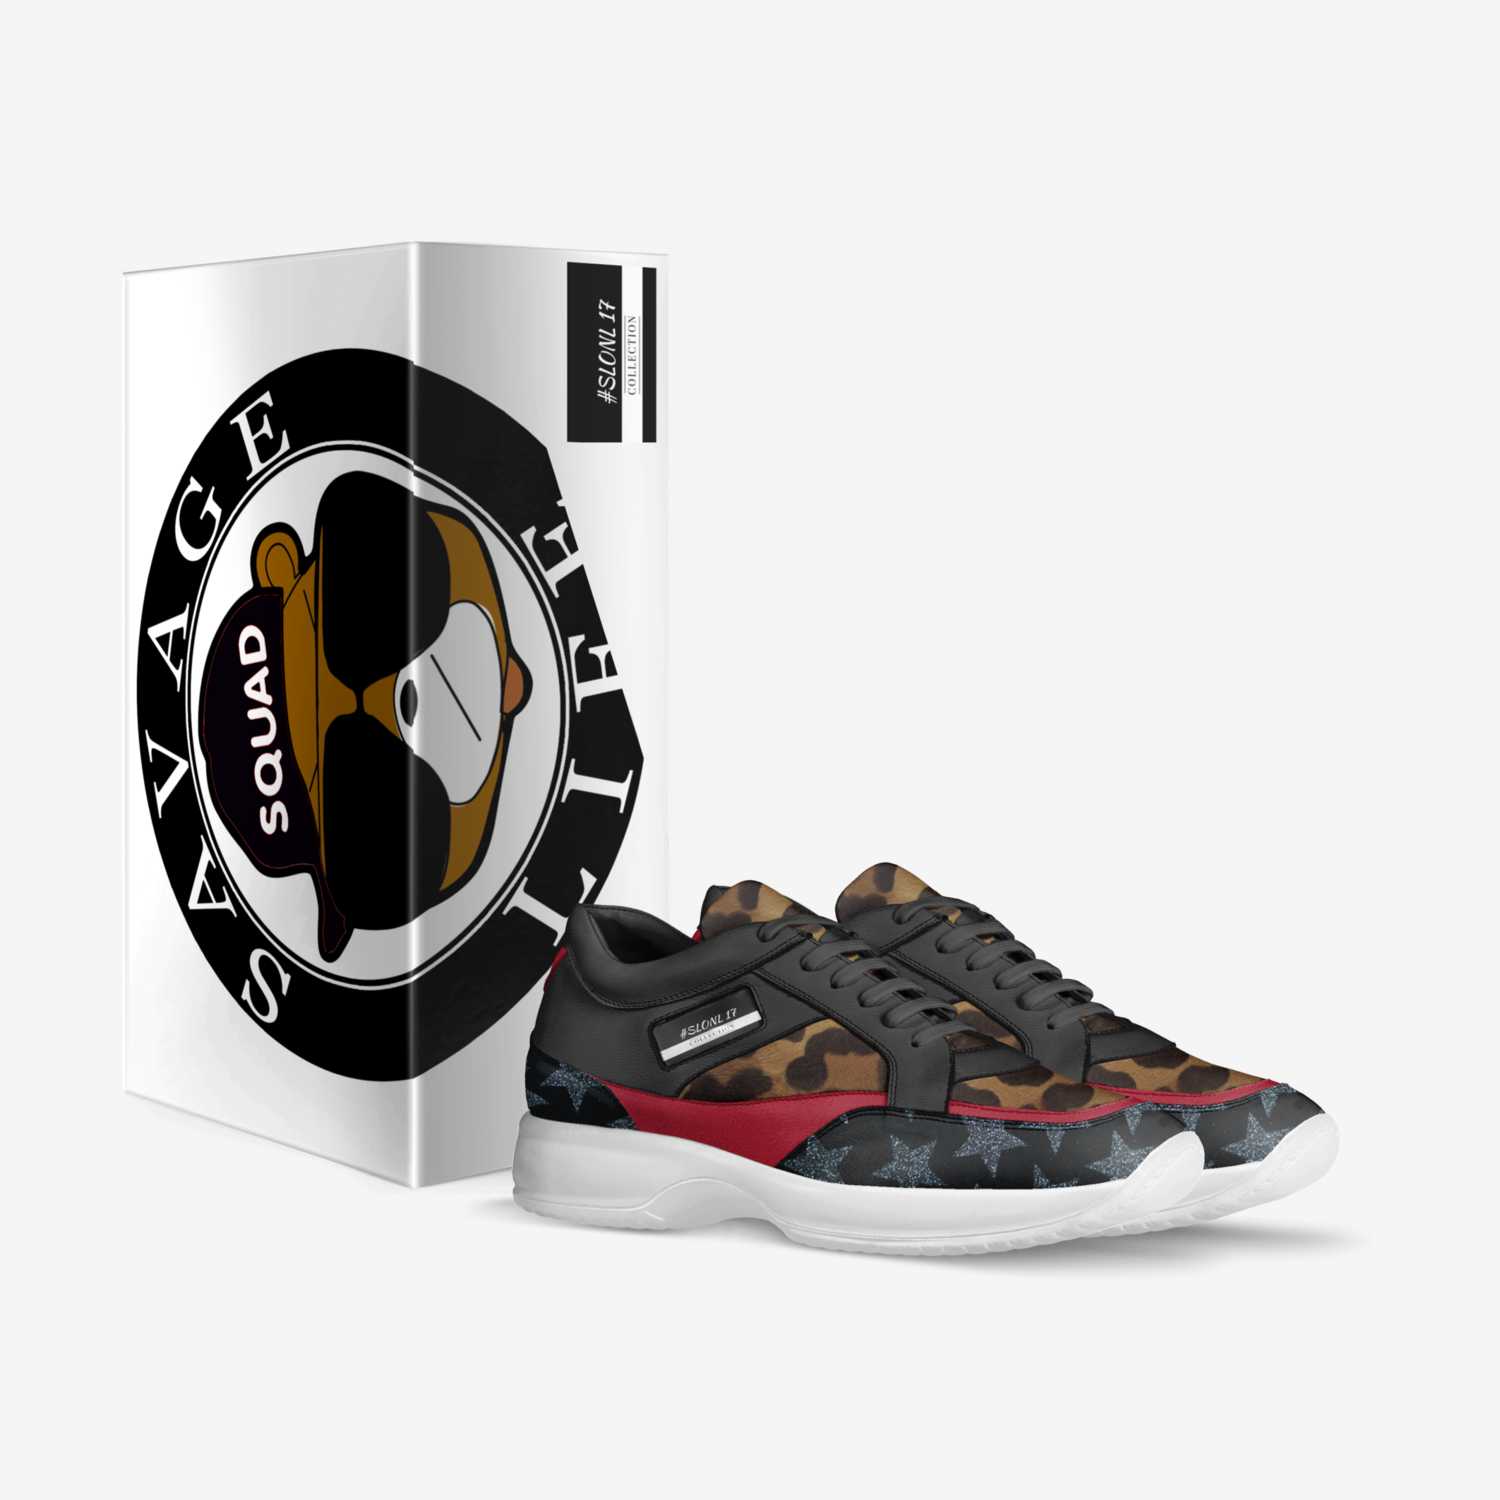 #SLONL 17 custom made in Italy shoes by Samson Onyema | Box view